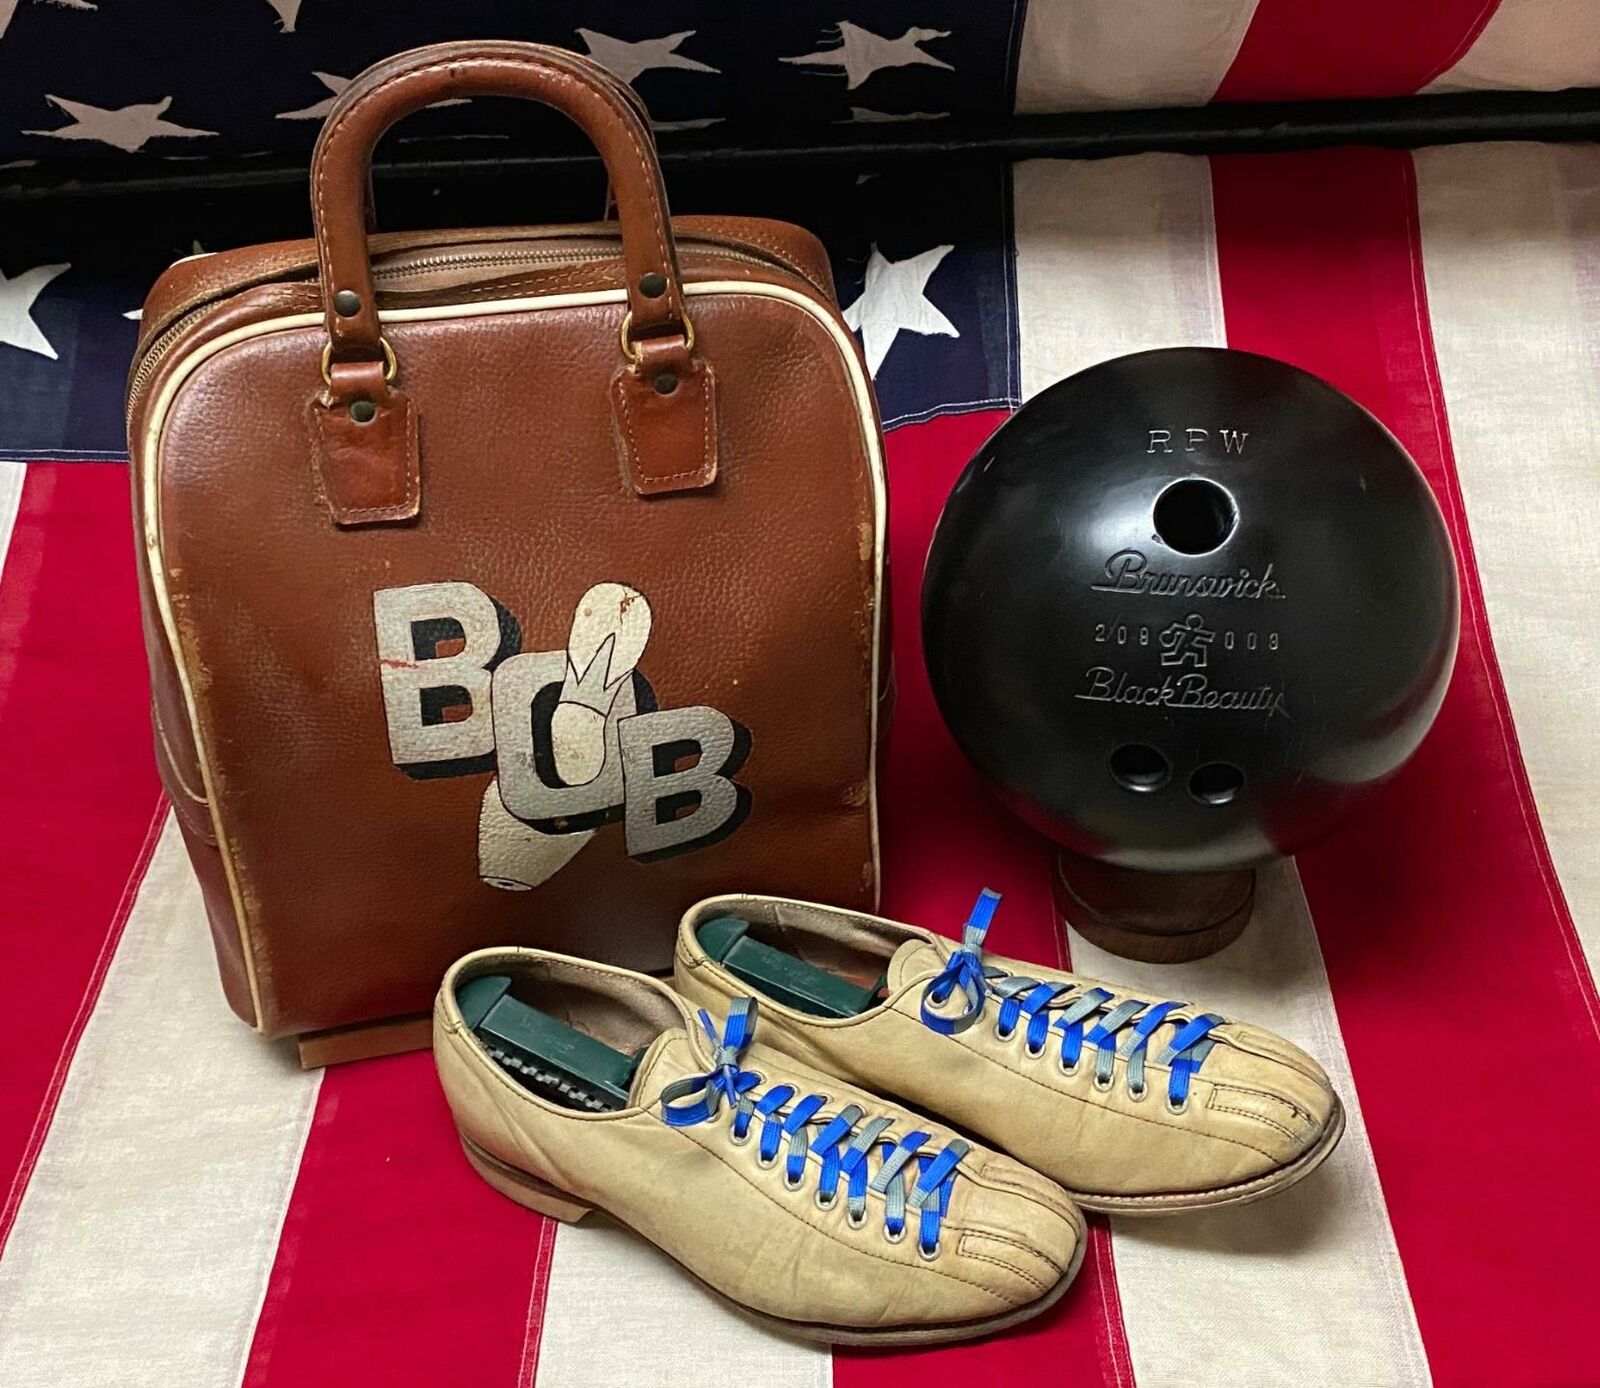 Vintage 1950s Leather Bowling Ball Bag Handpainted Brunswick Black Beauty  Ball + | eBay